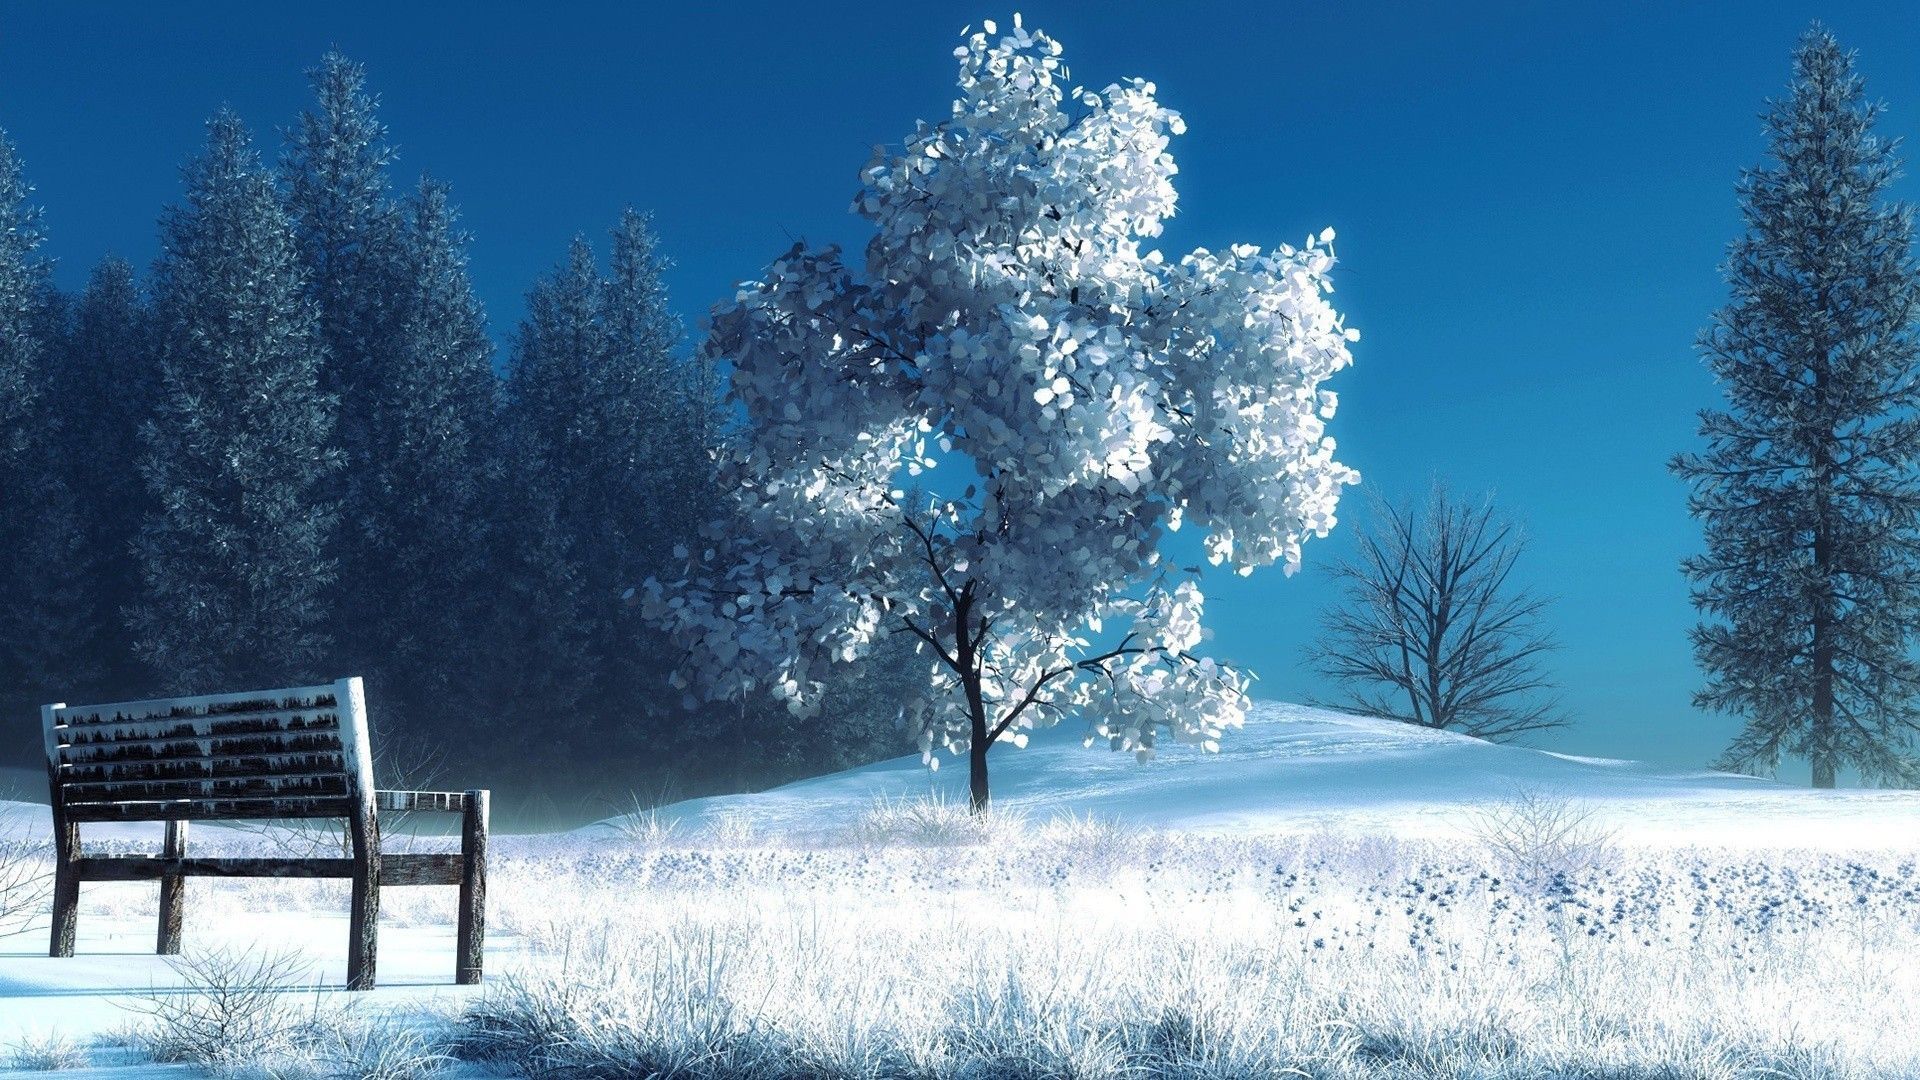 Download Anime Winter Scenery Wallpaper 10 HD Wallpaper 1080p And Share It With More People W. Ideias De Paisagismo, Lindas Paisagens, Fotos De Paisagem